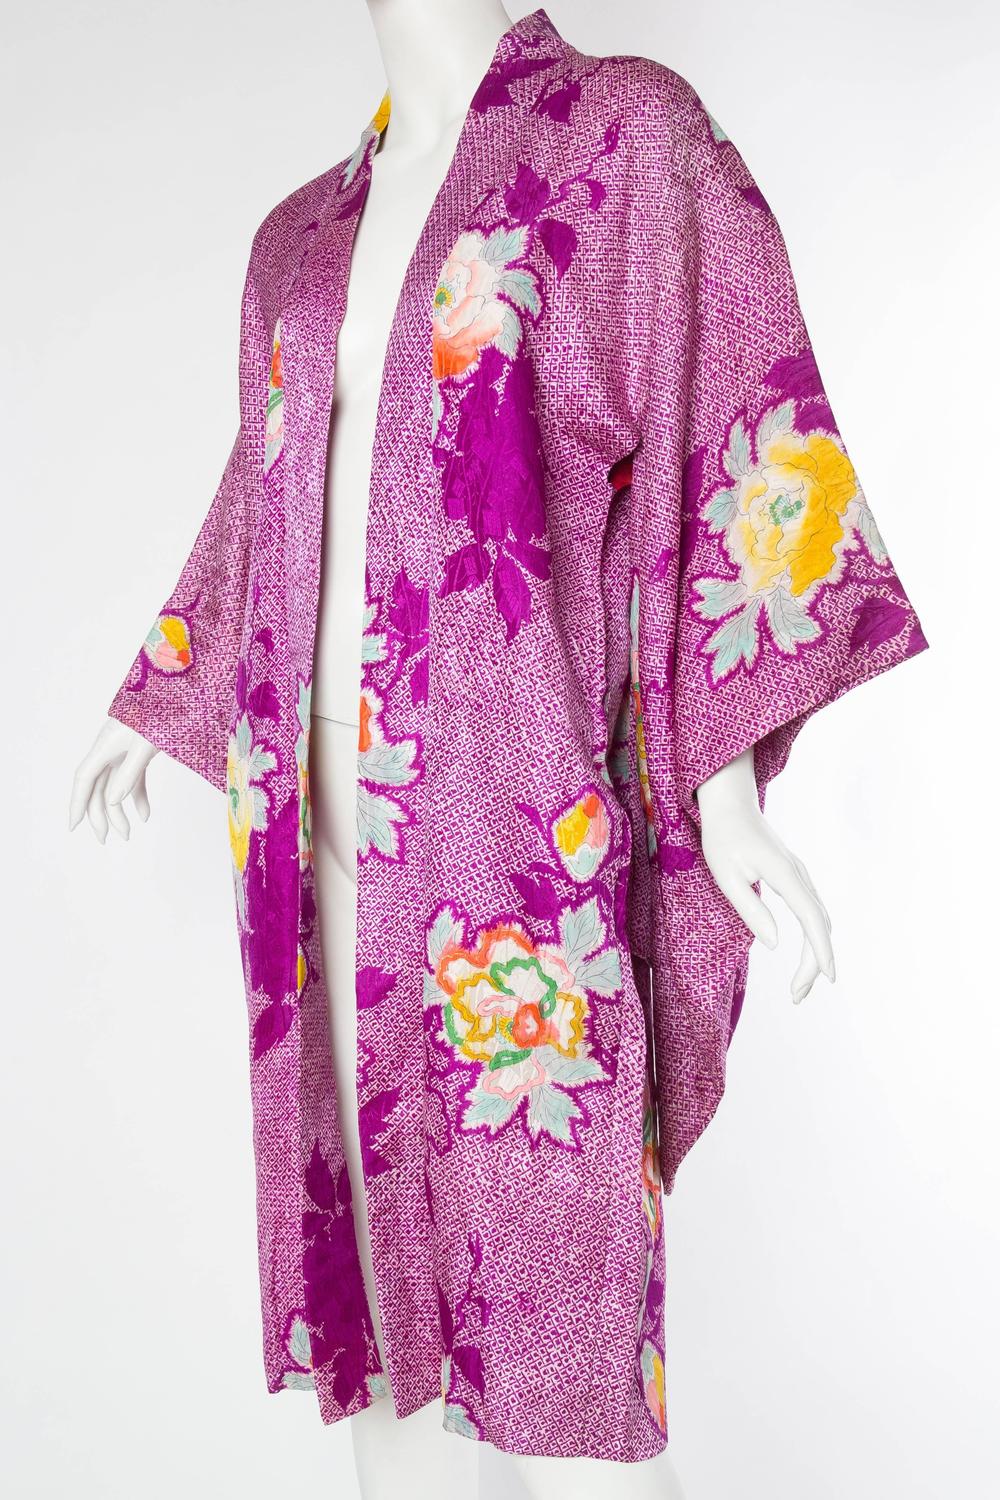 Vintage Silk Kimono For Sale at 1stdibs